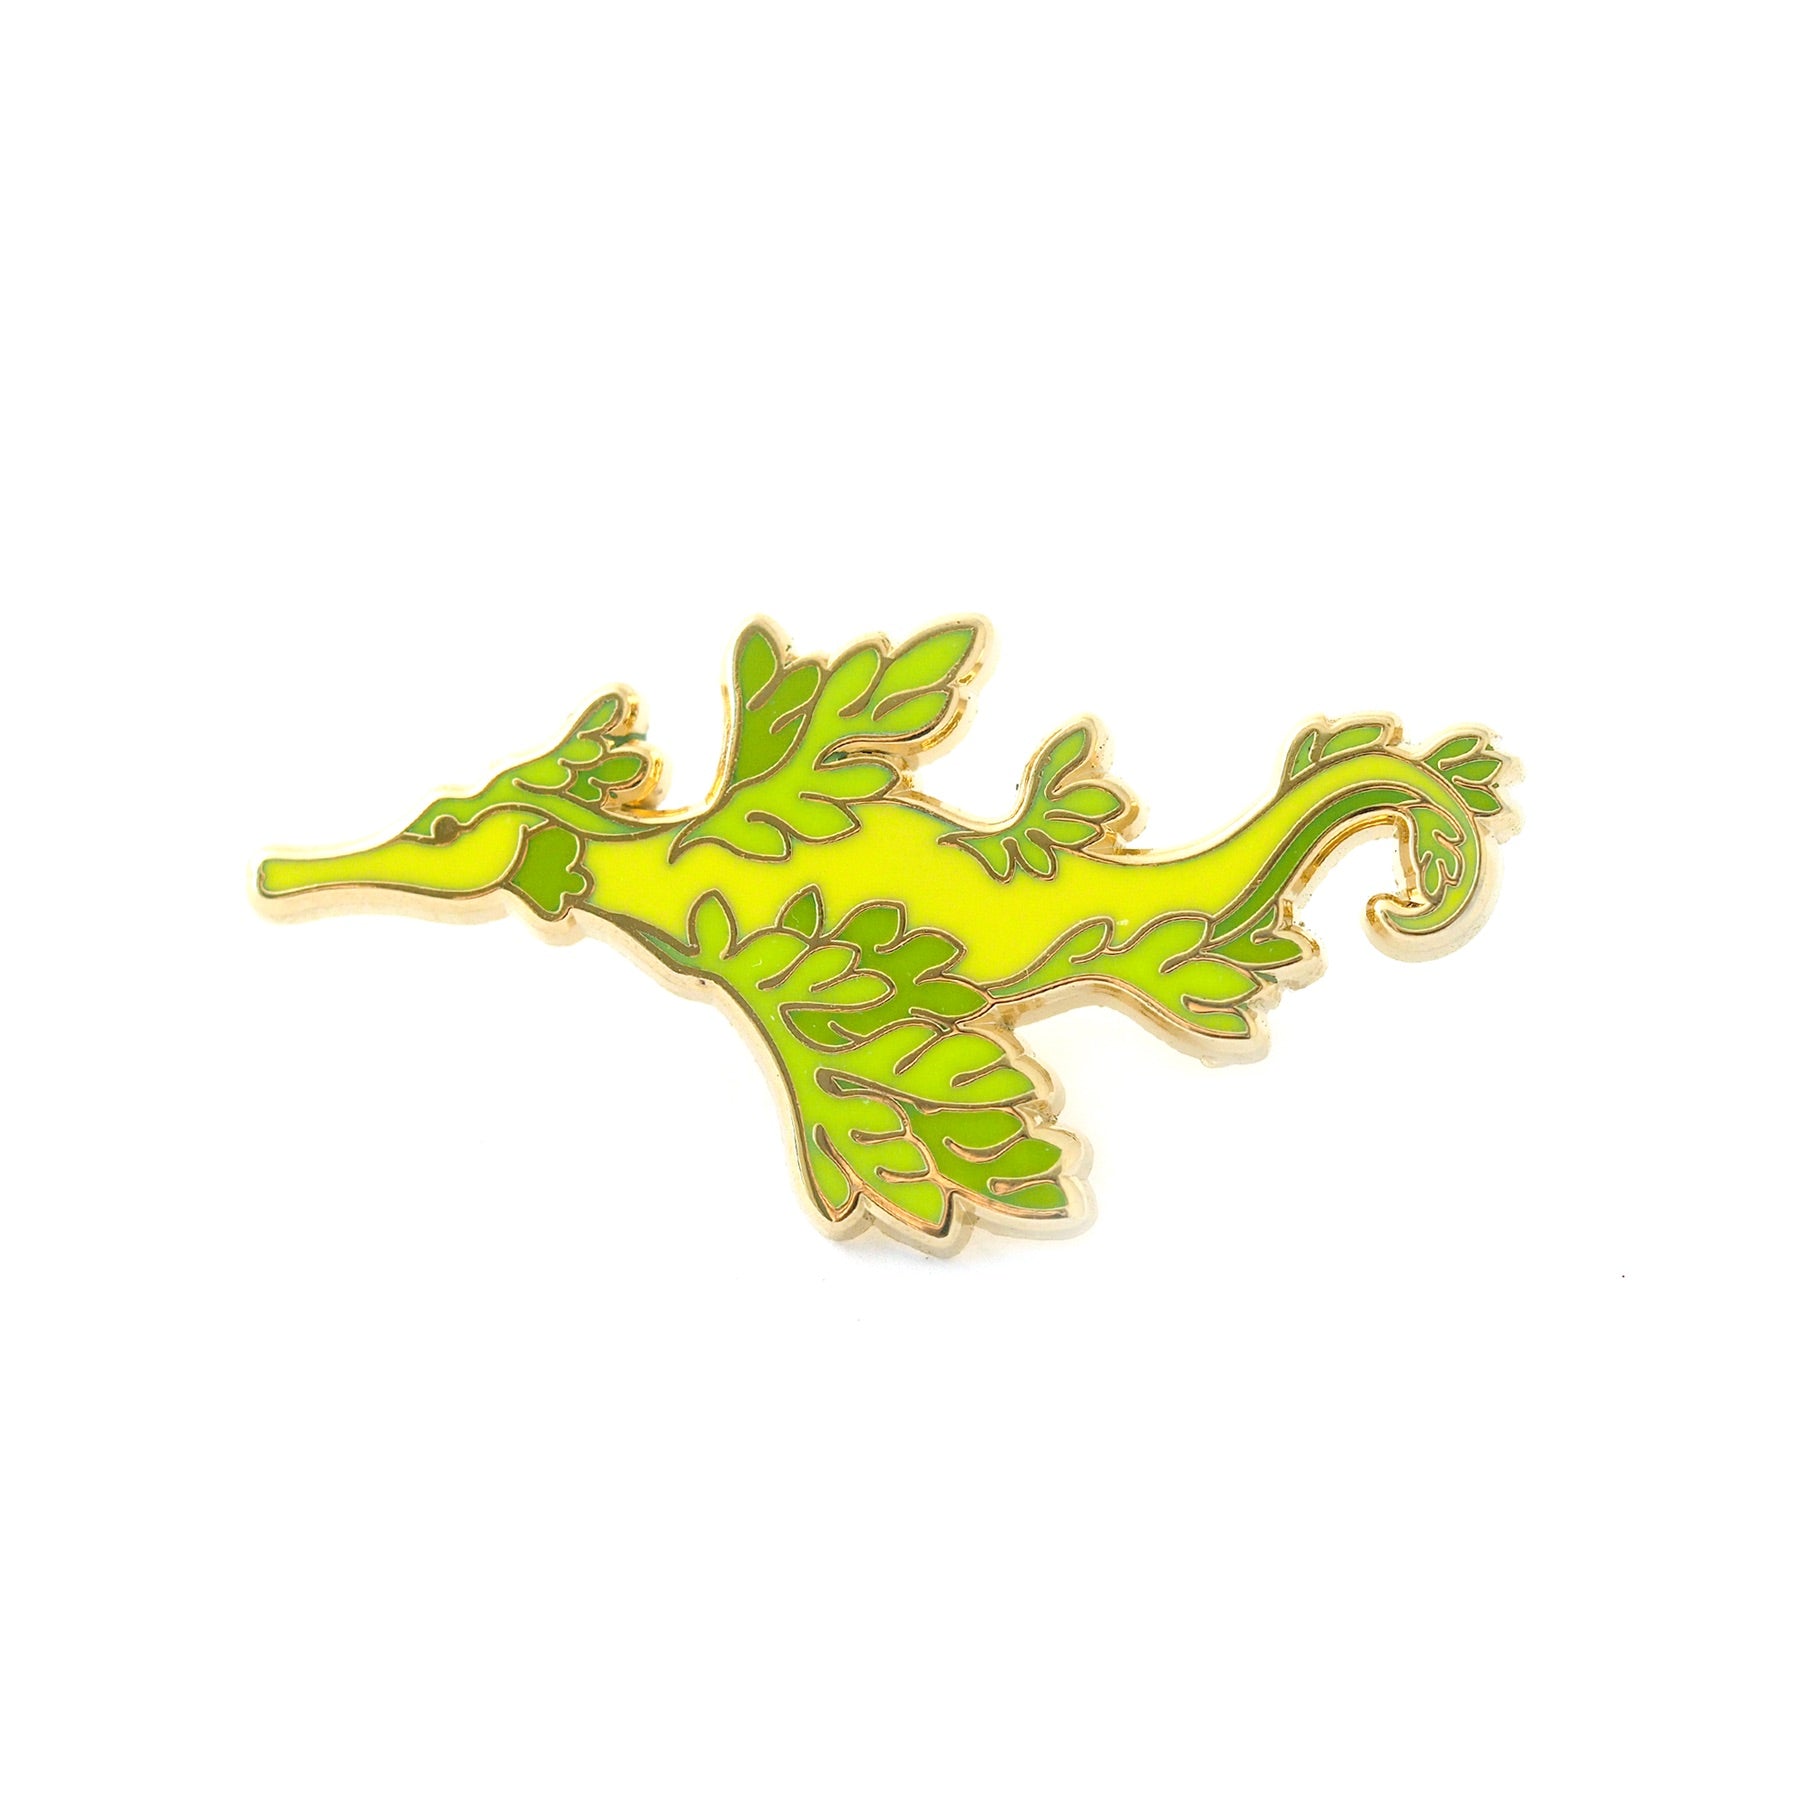 Enamel Pin - Leafy Sea Dragon